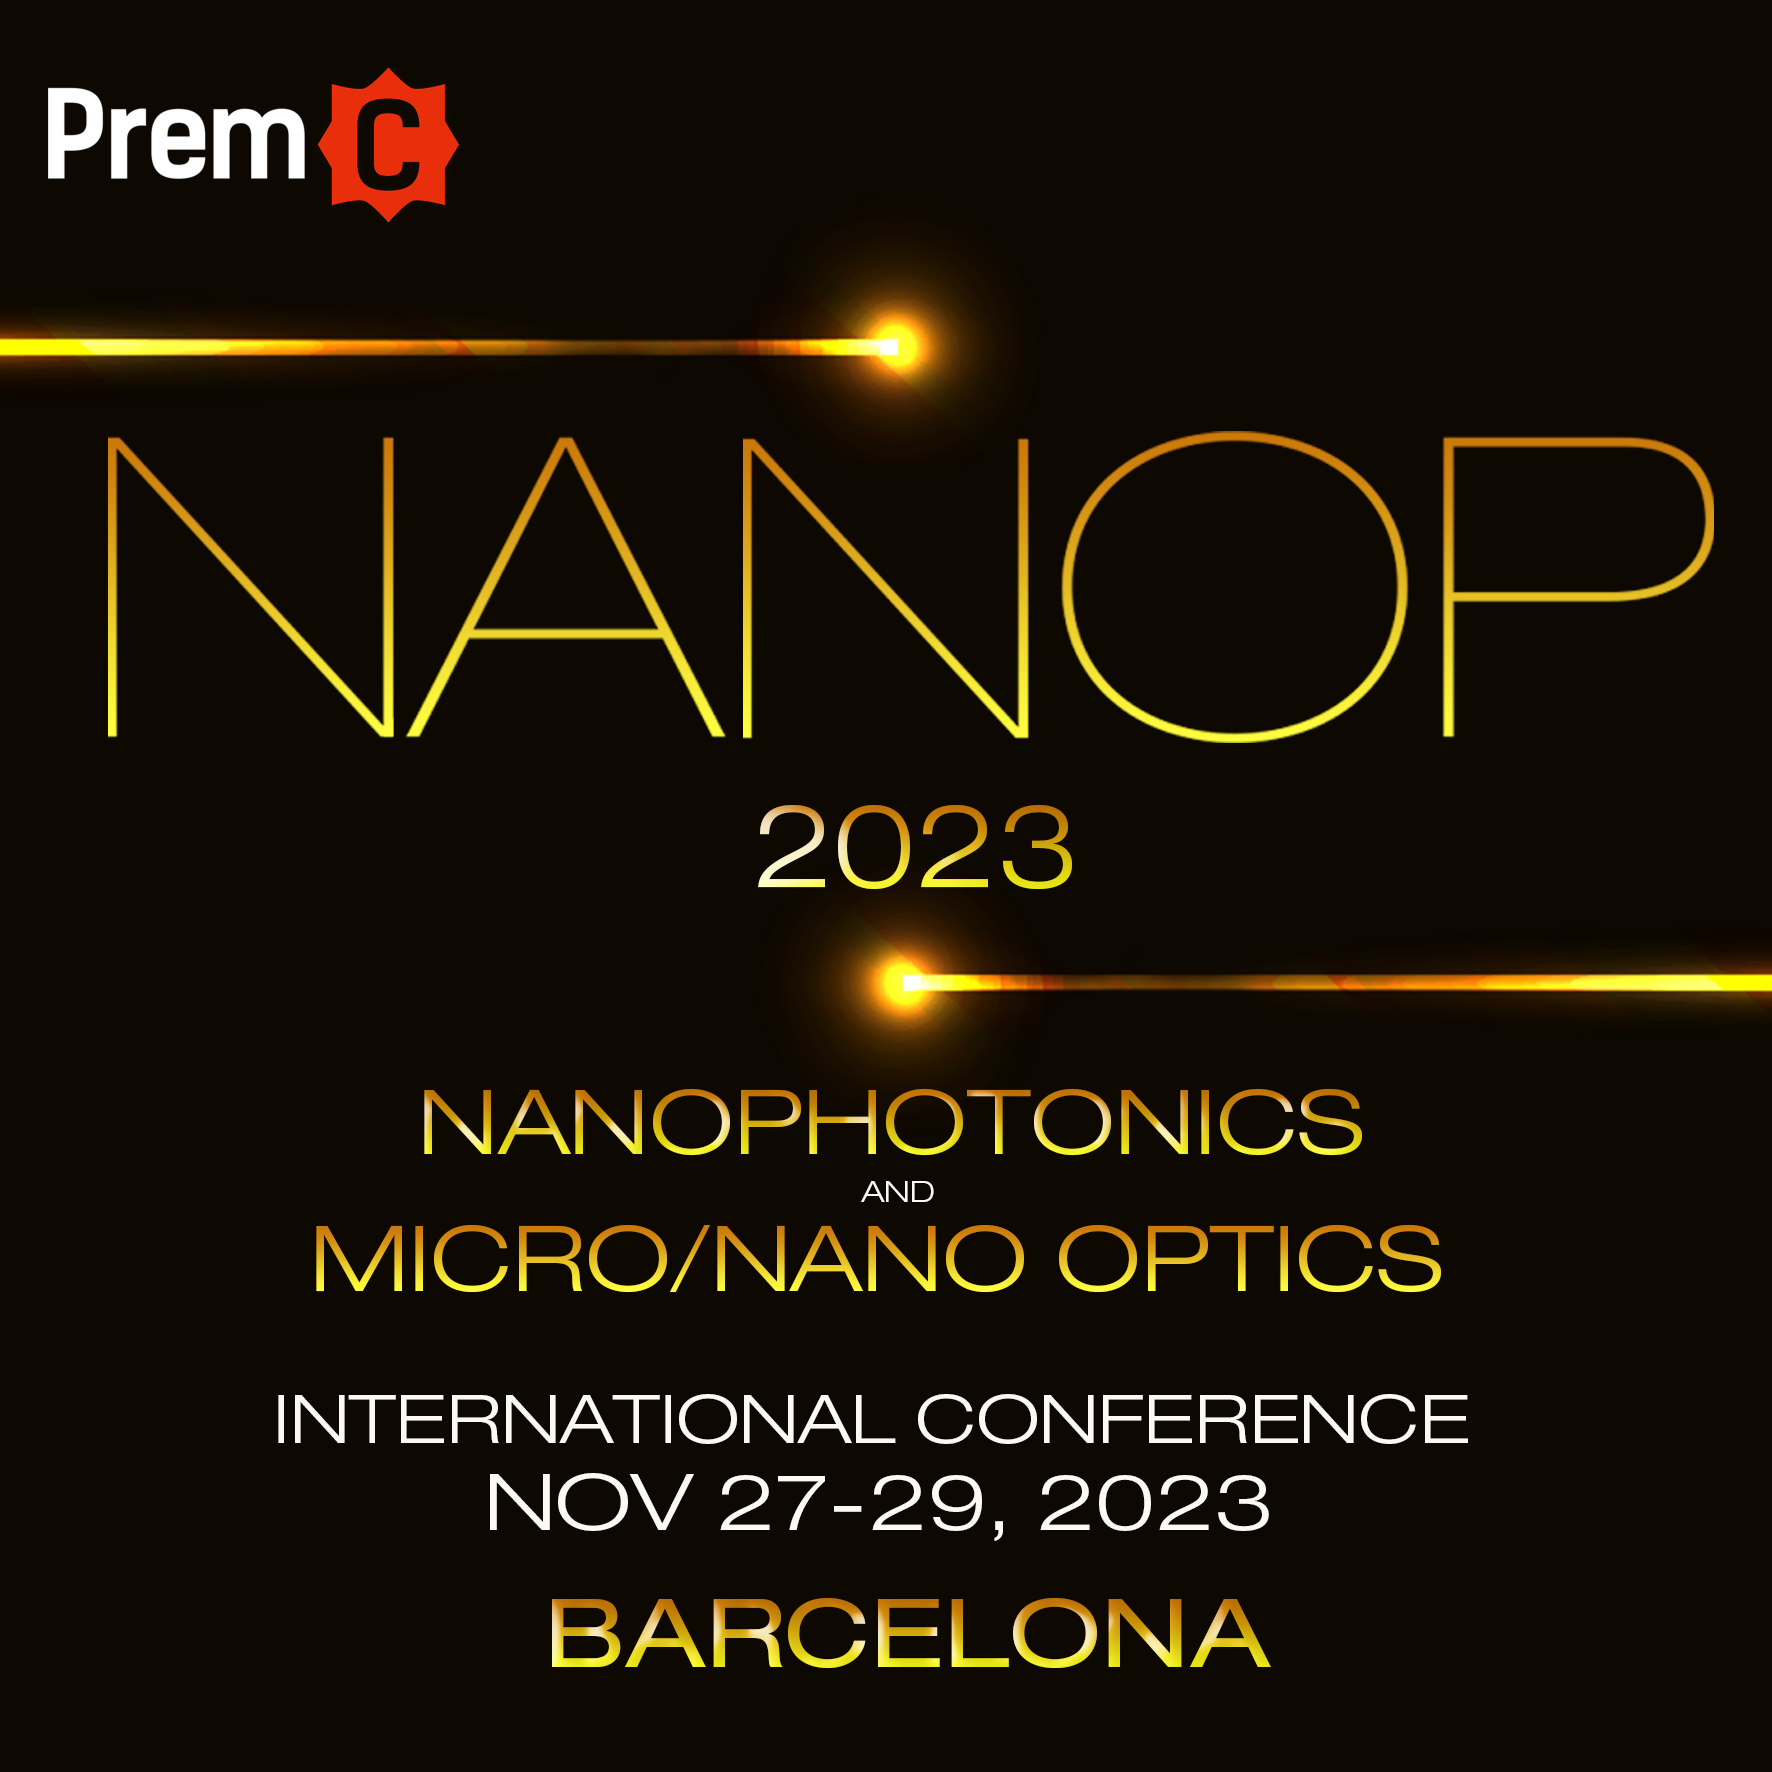 NANOP 2023 : Nanophotonics and Micro/Nano Optics International Conference 2023